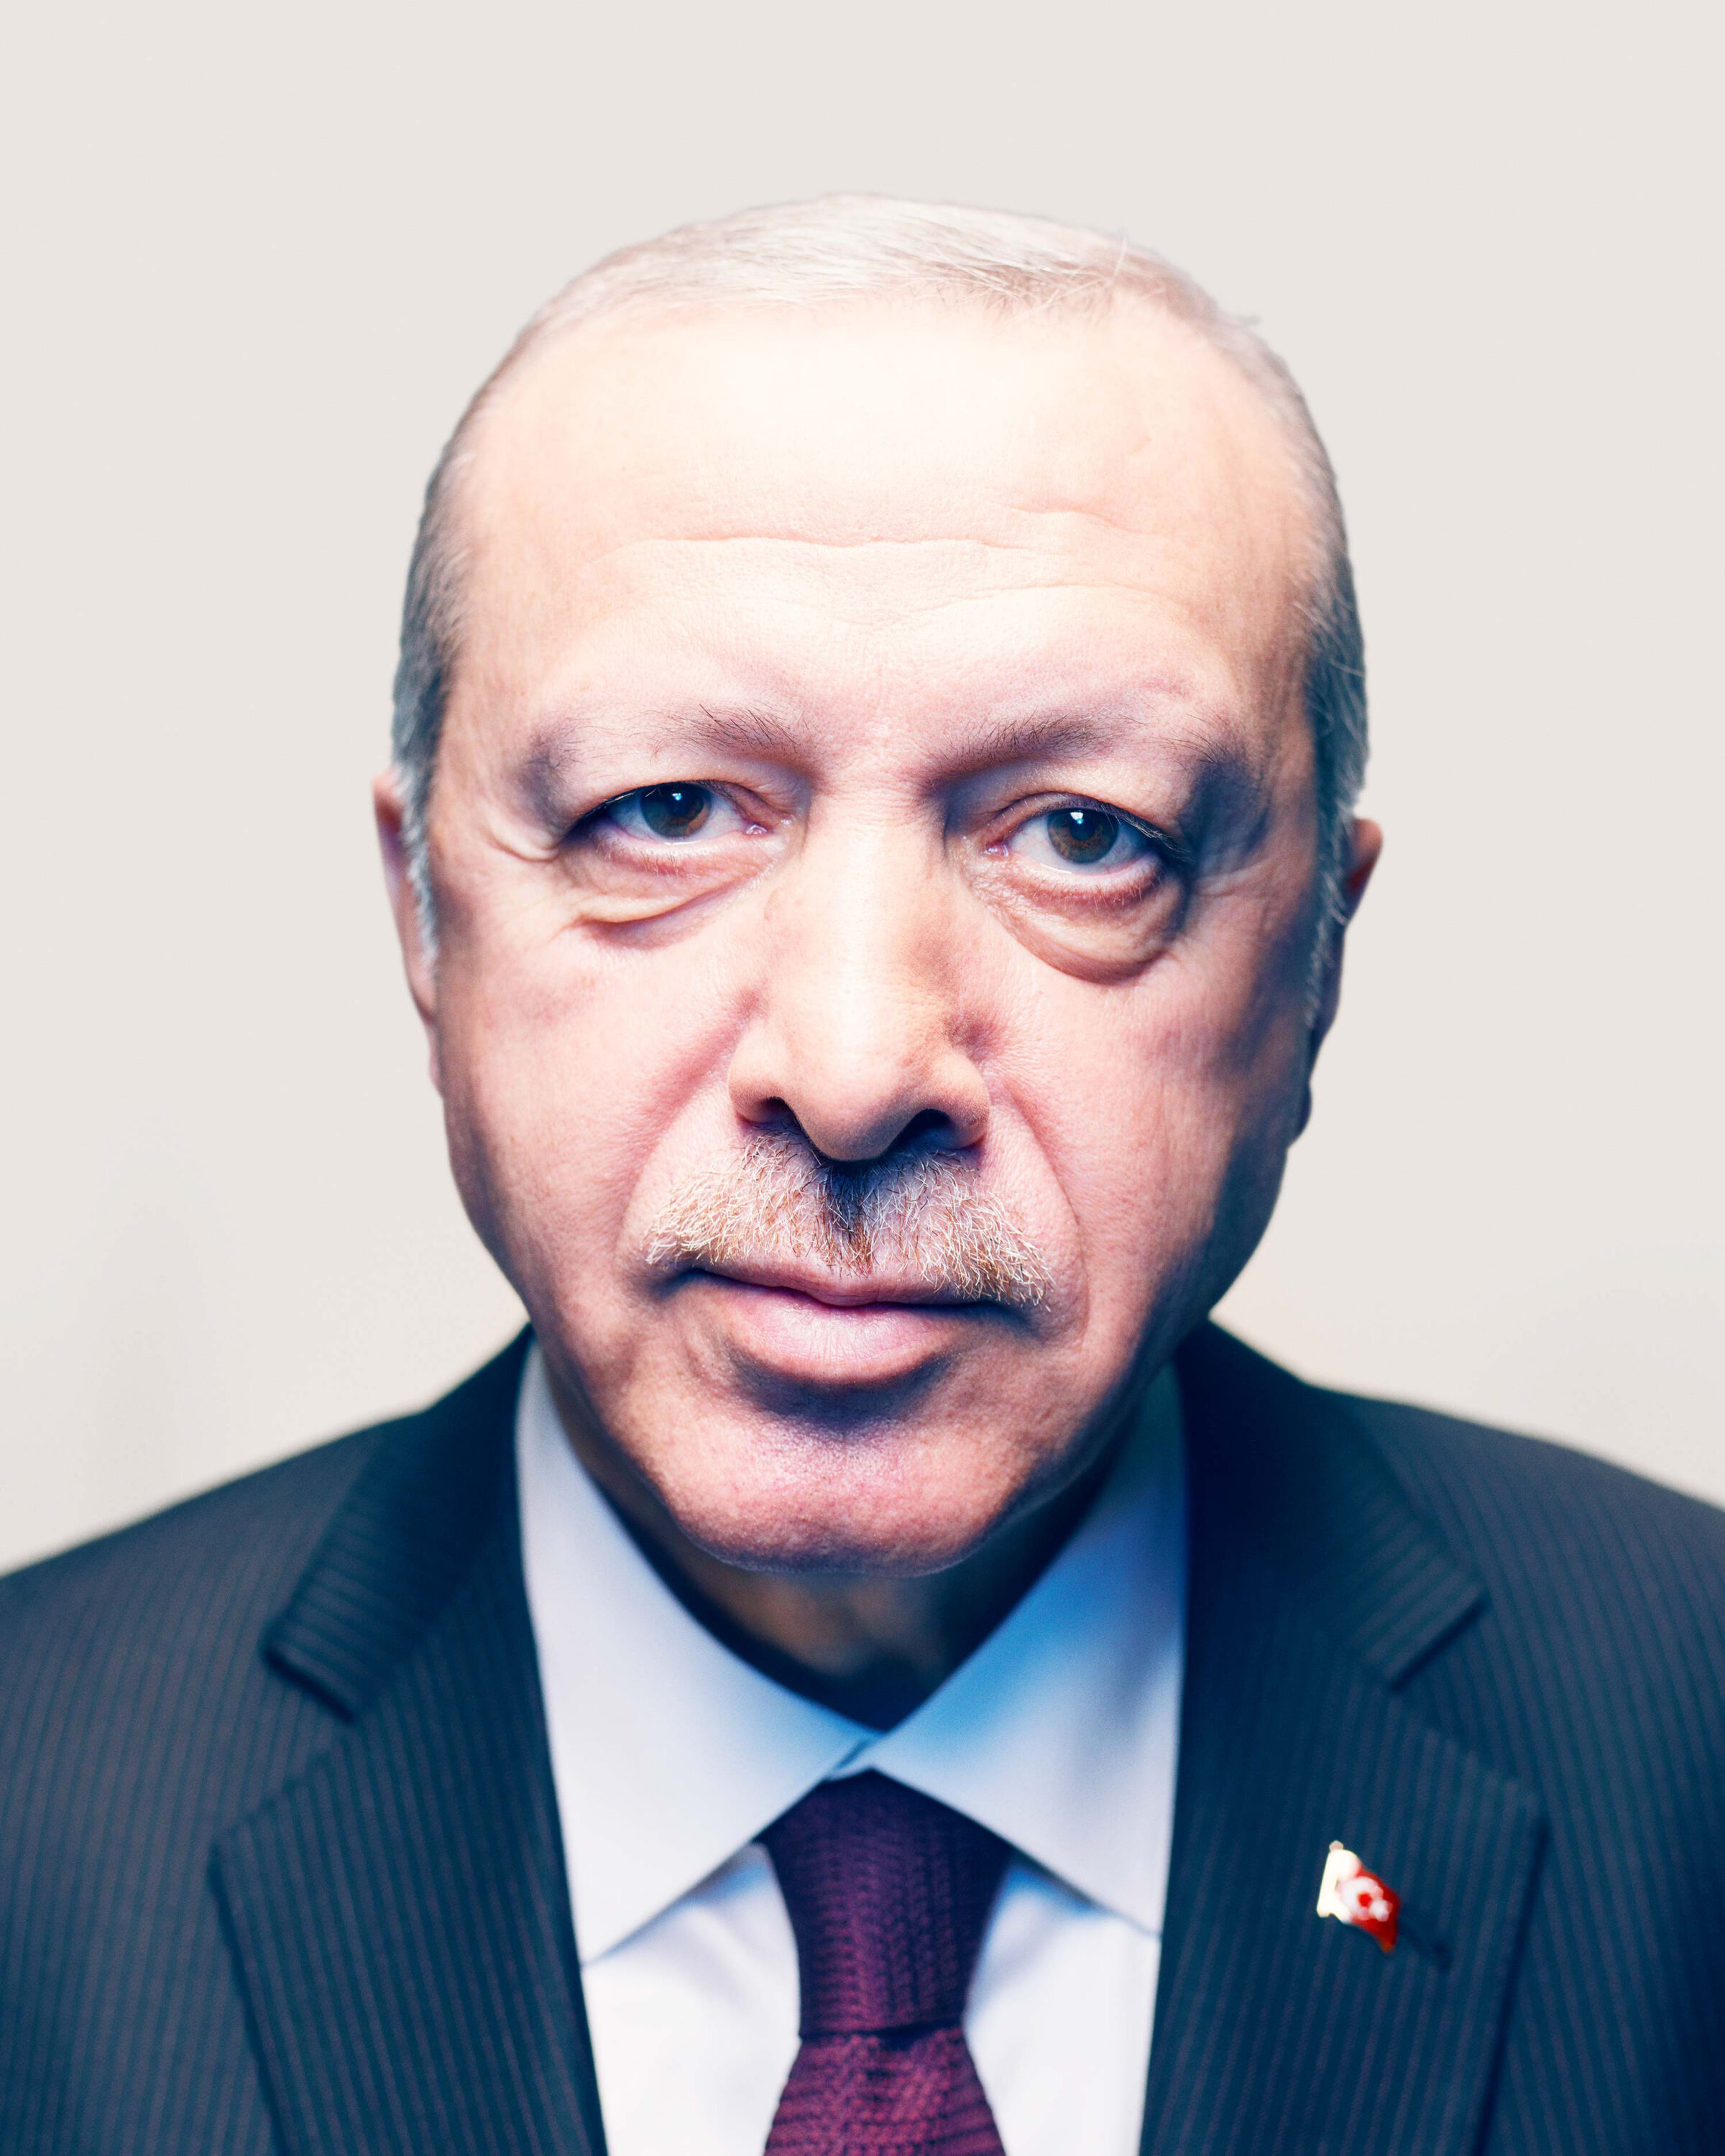 resize_Pres.Erdogan_021